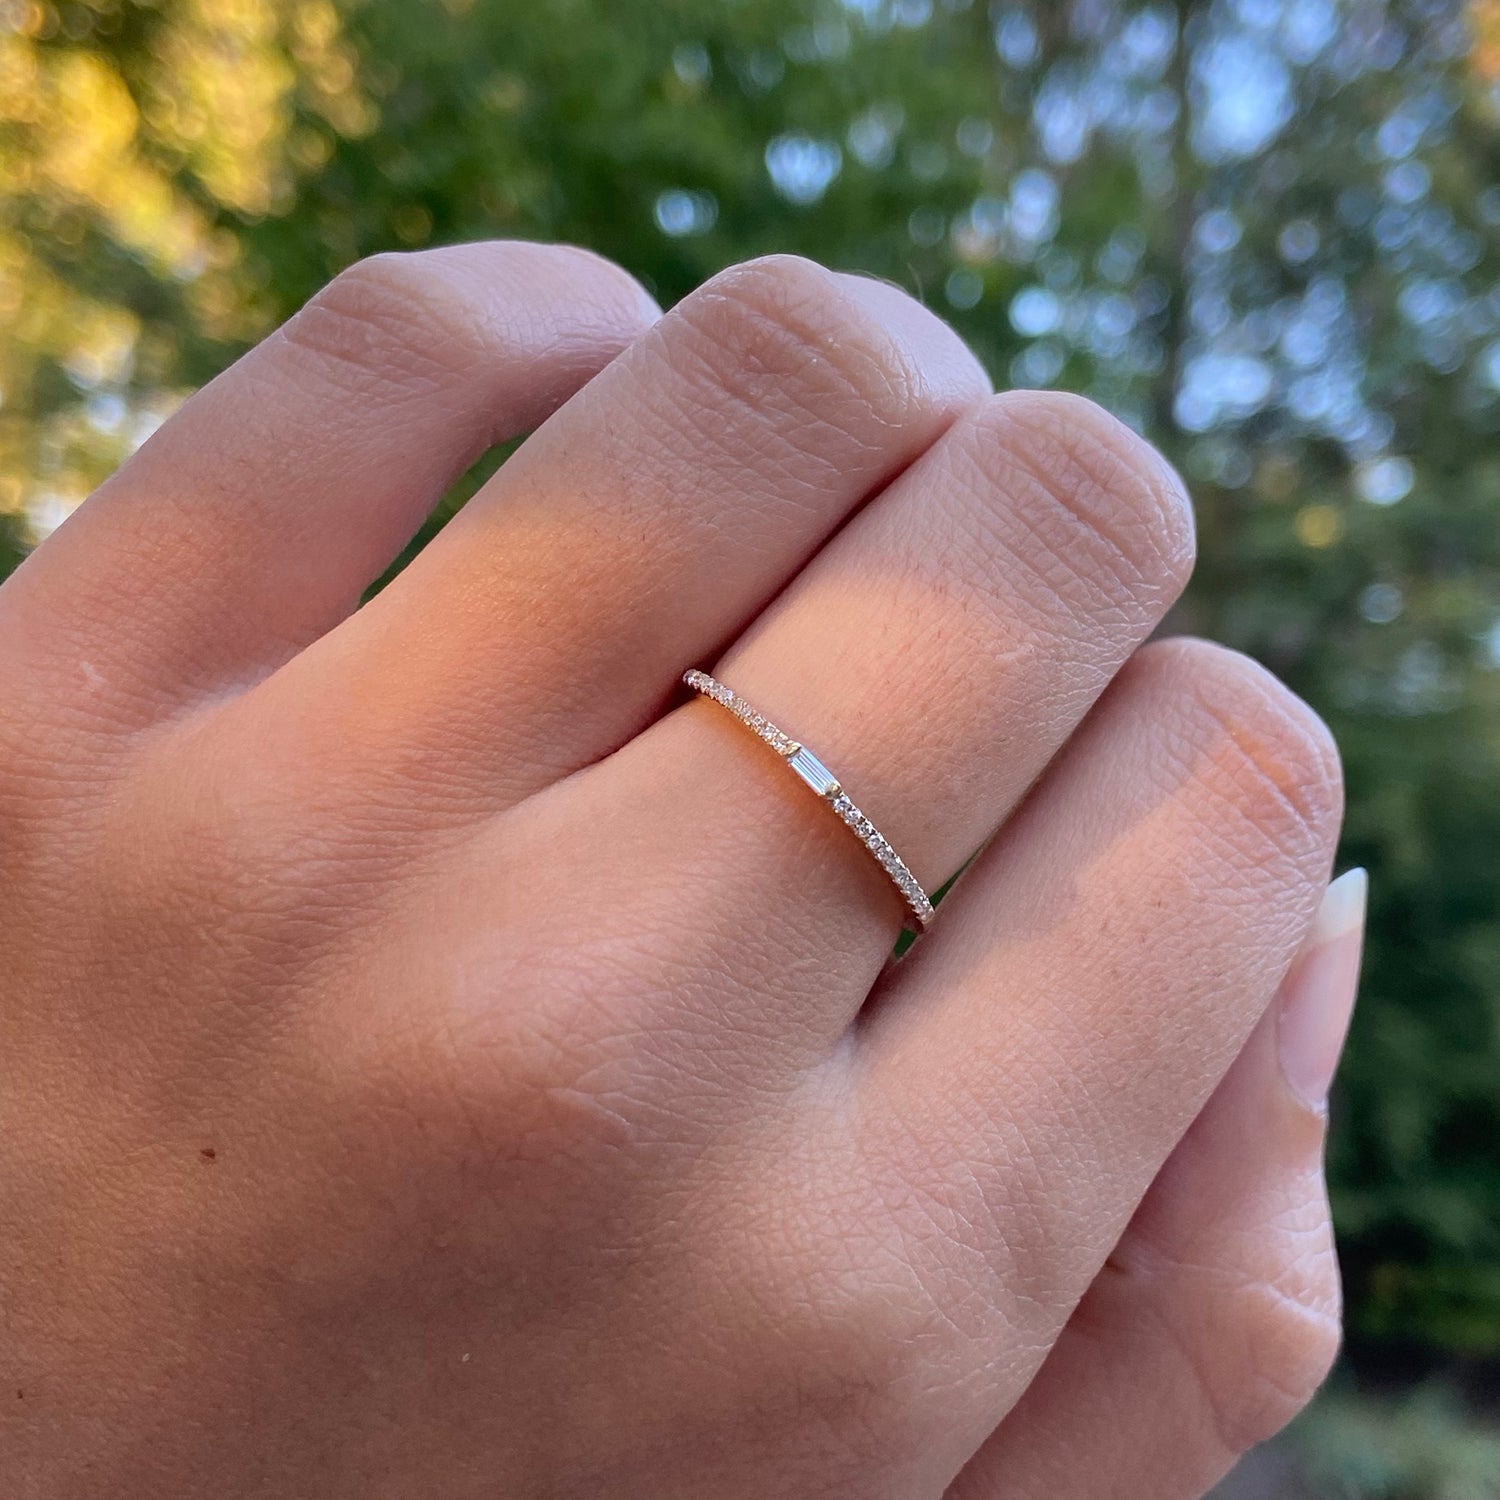 Single baguette thin diamond stacking ring